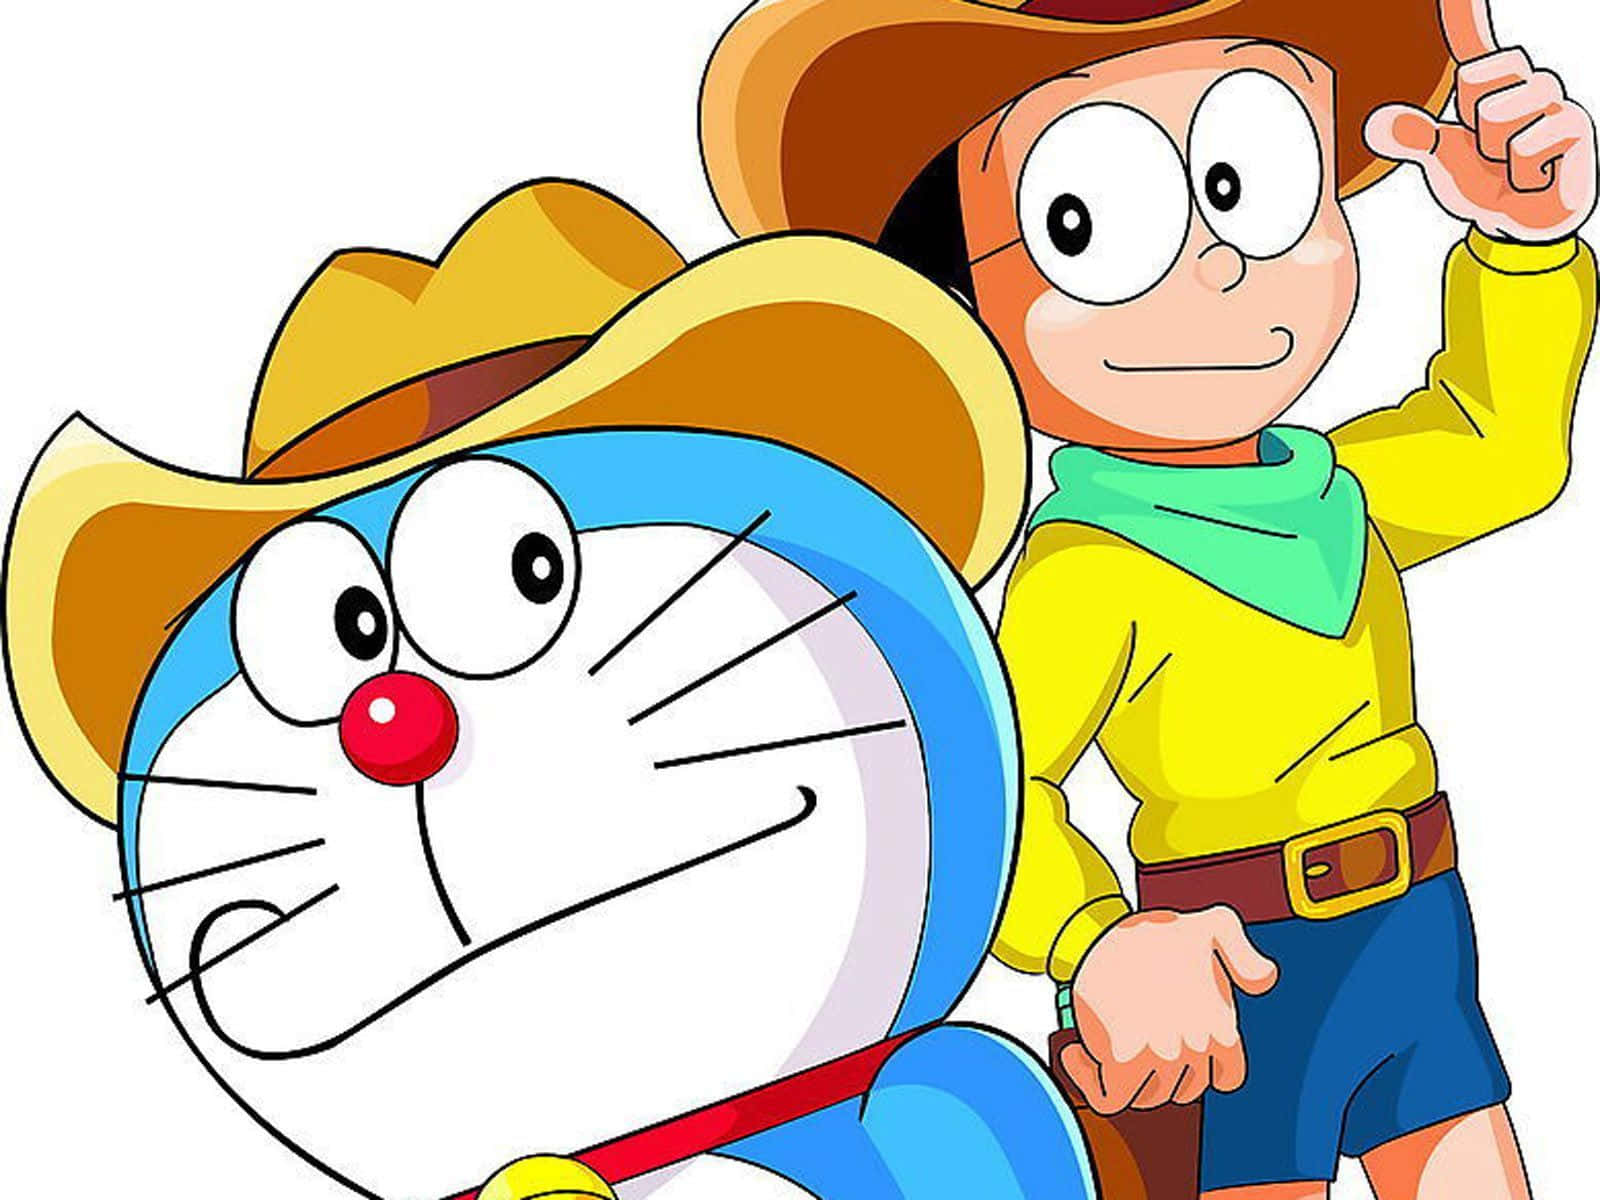 A nostalgic scene of happiness with Doraemon